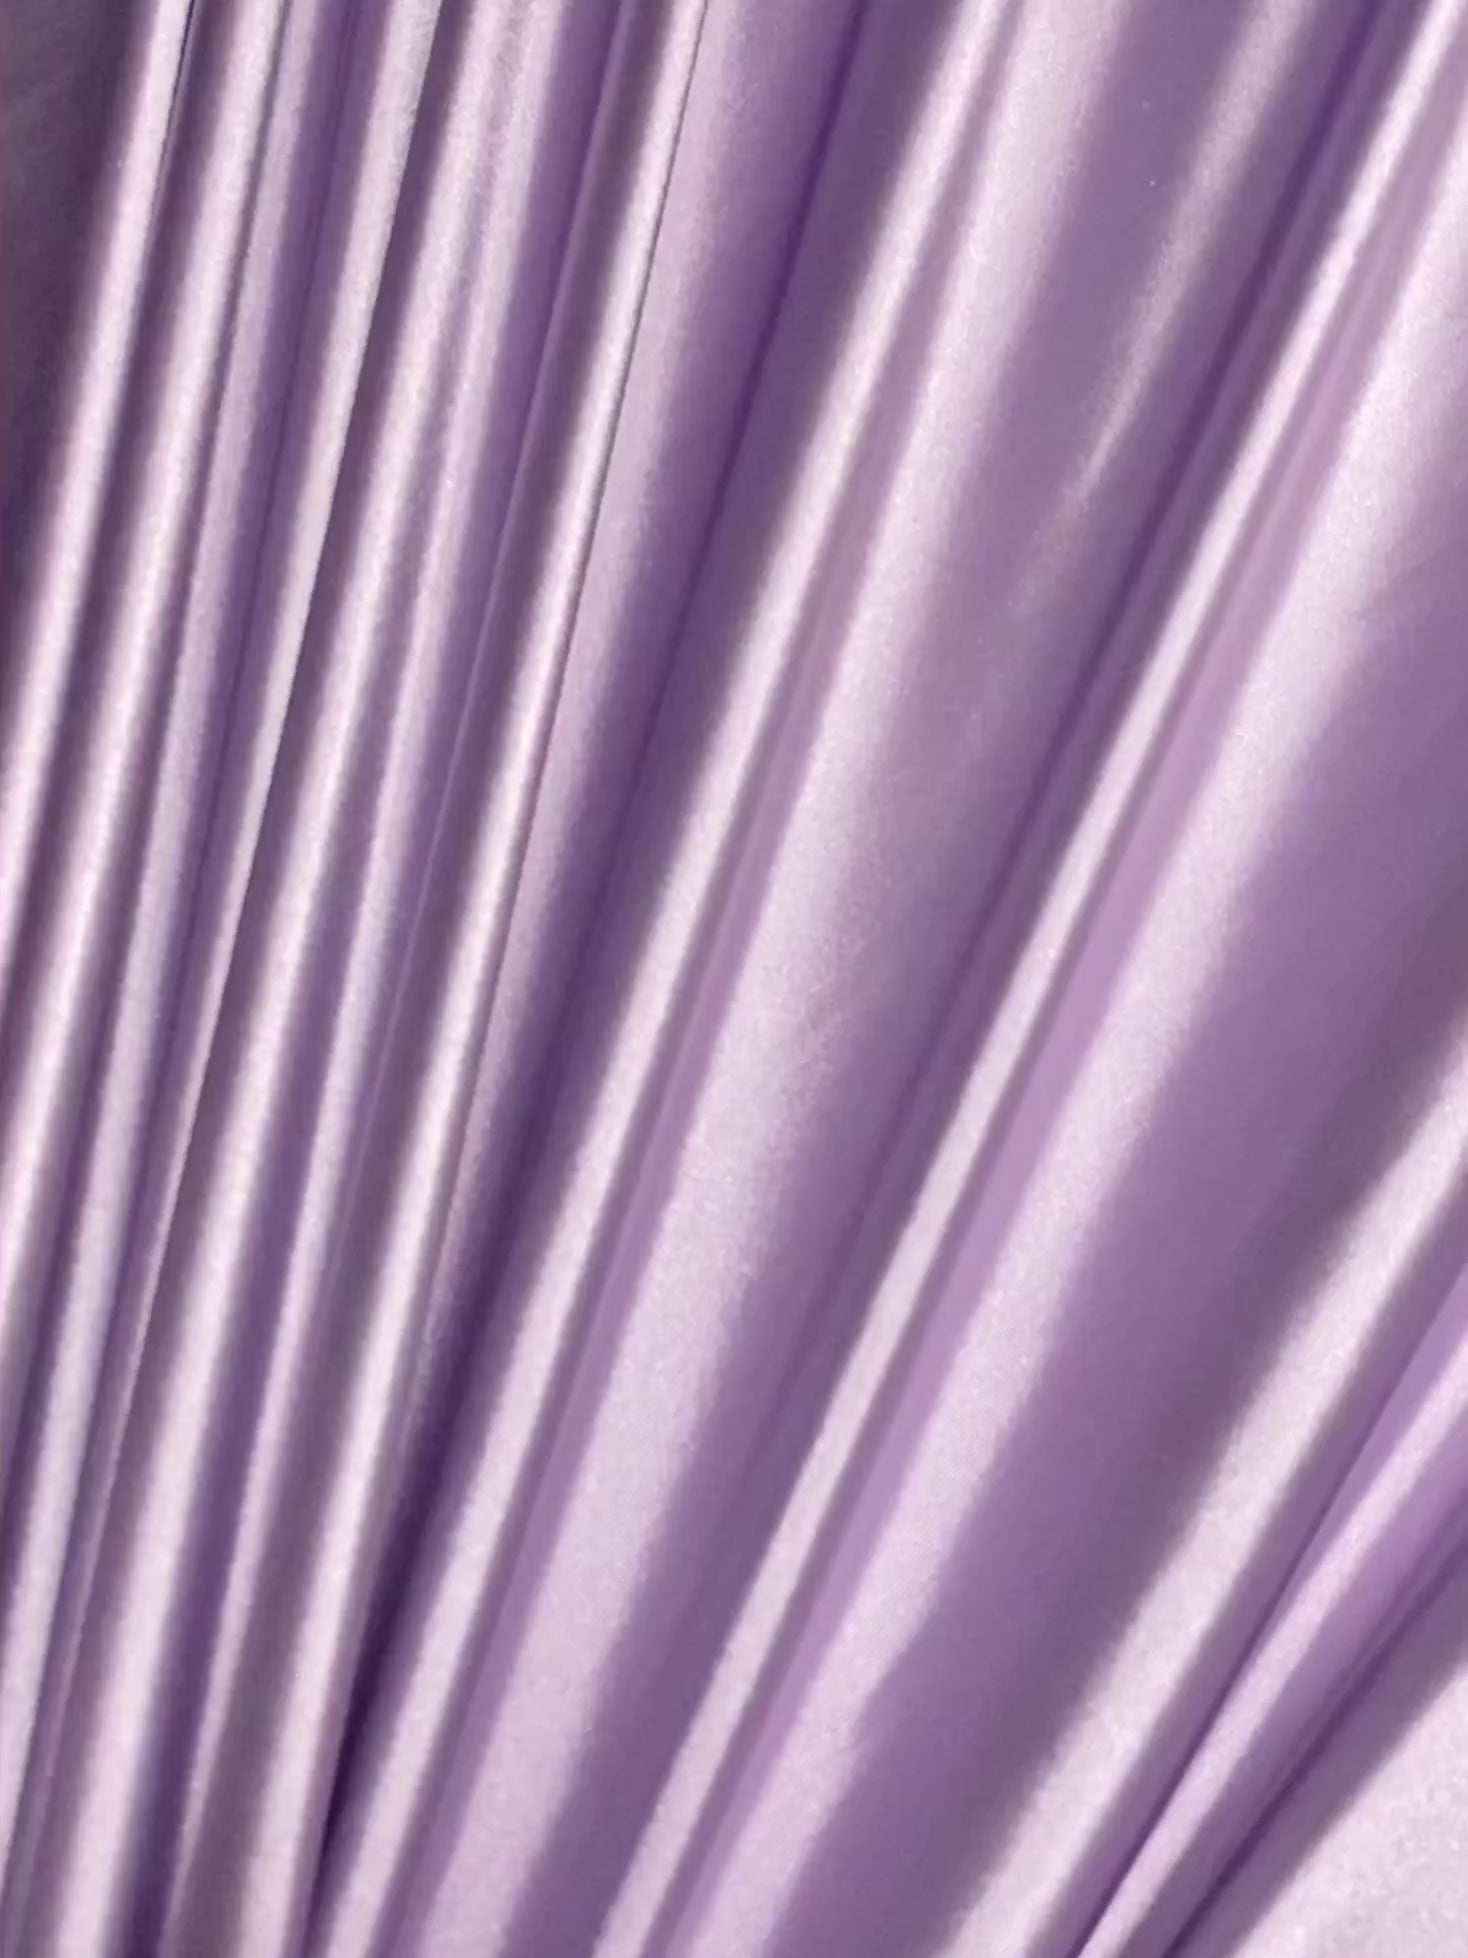 Swimwear Fabric Light Violet Spandex Fabric Material Nylon Spandex